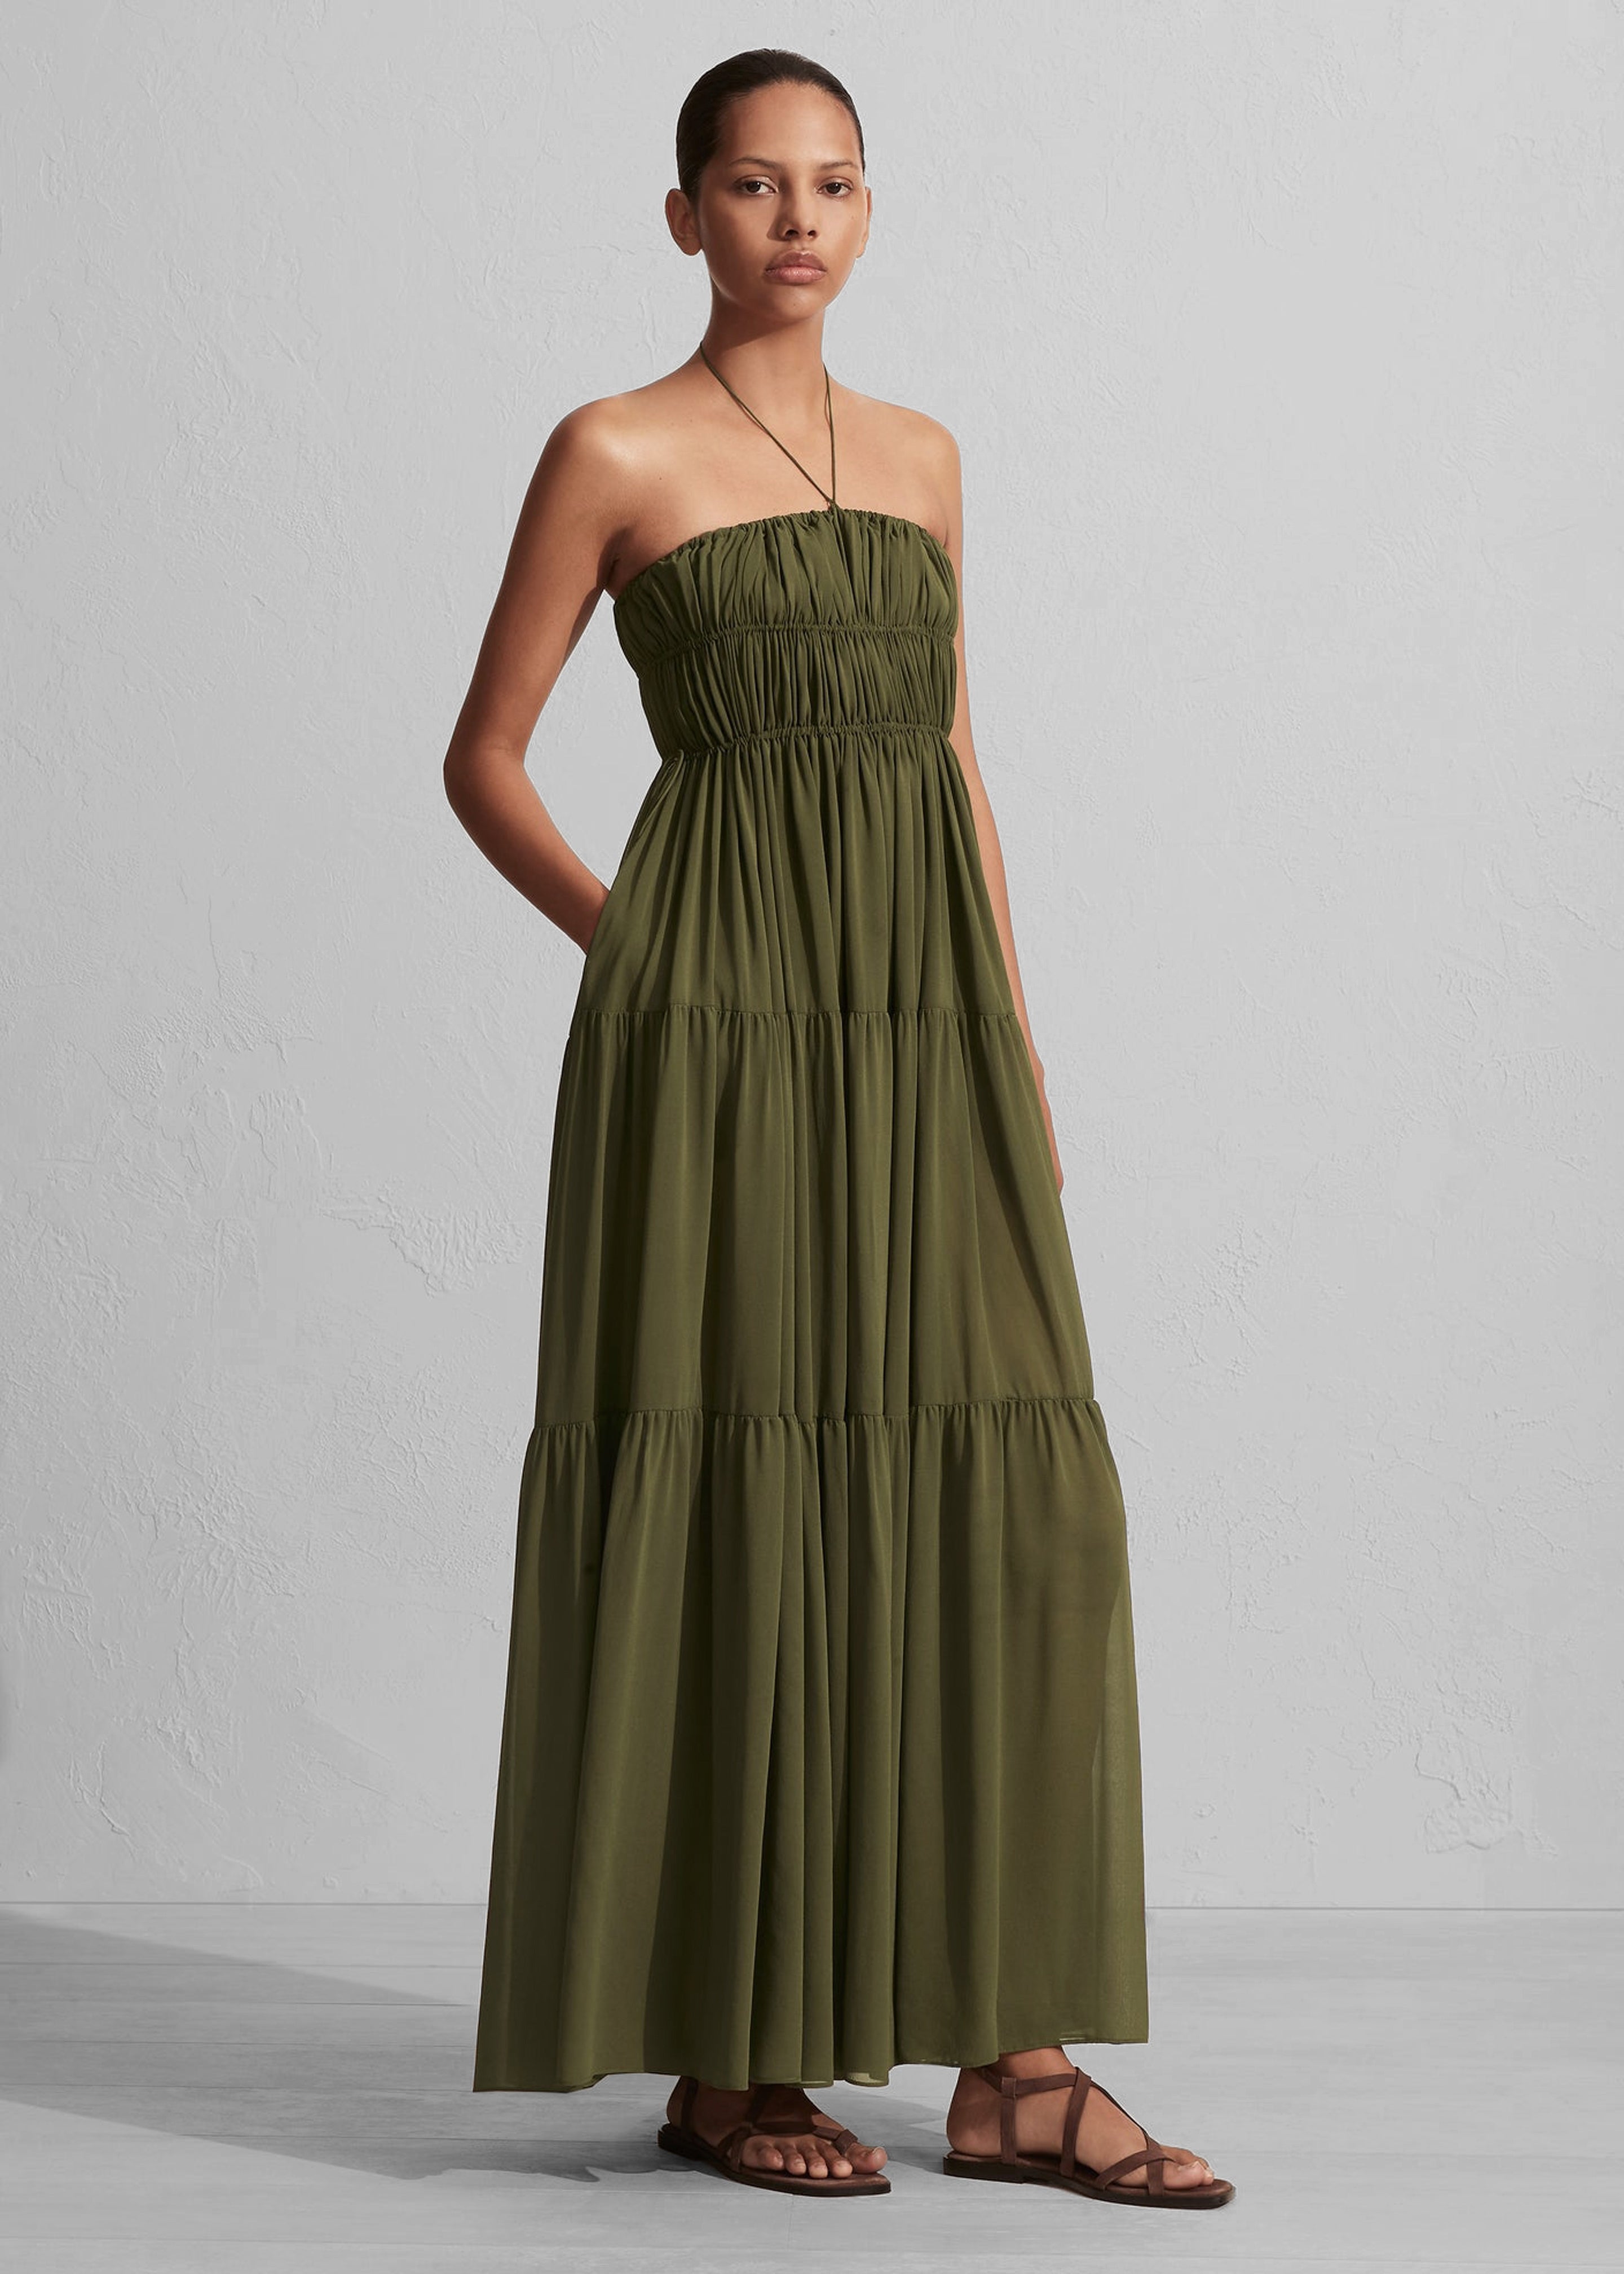 Matteau Shirred Halter Dress - Cypress - 2